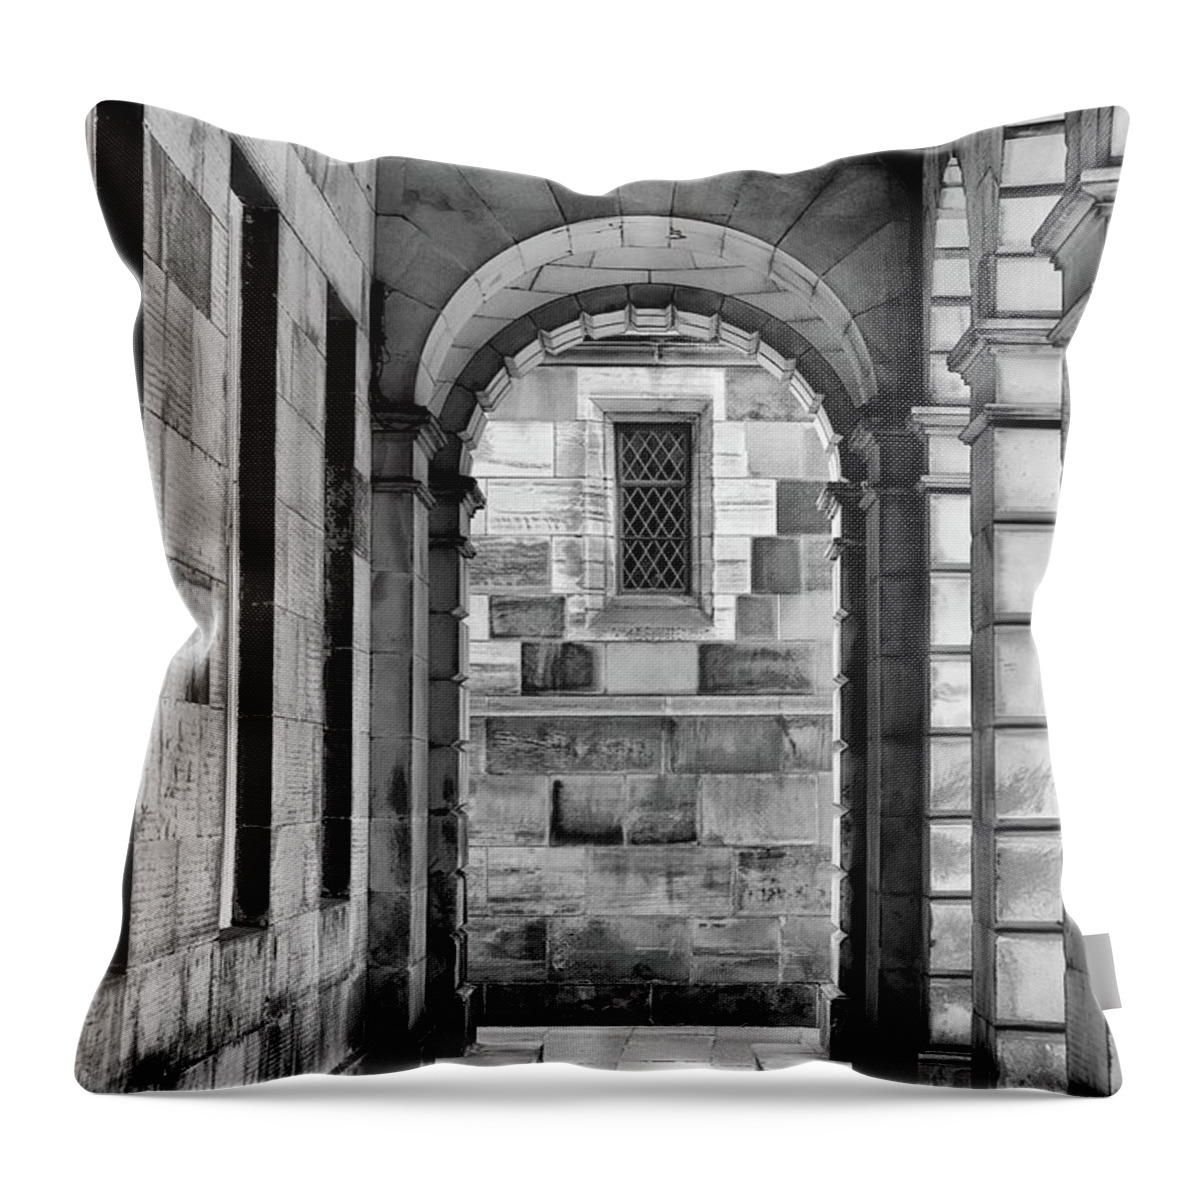 Edinburgh Throw Pillow featuring the photograph Under the Arches - Parliament Square, Edinburgh by Yvonne Johnstone